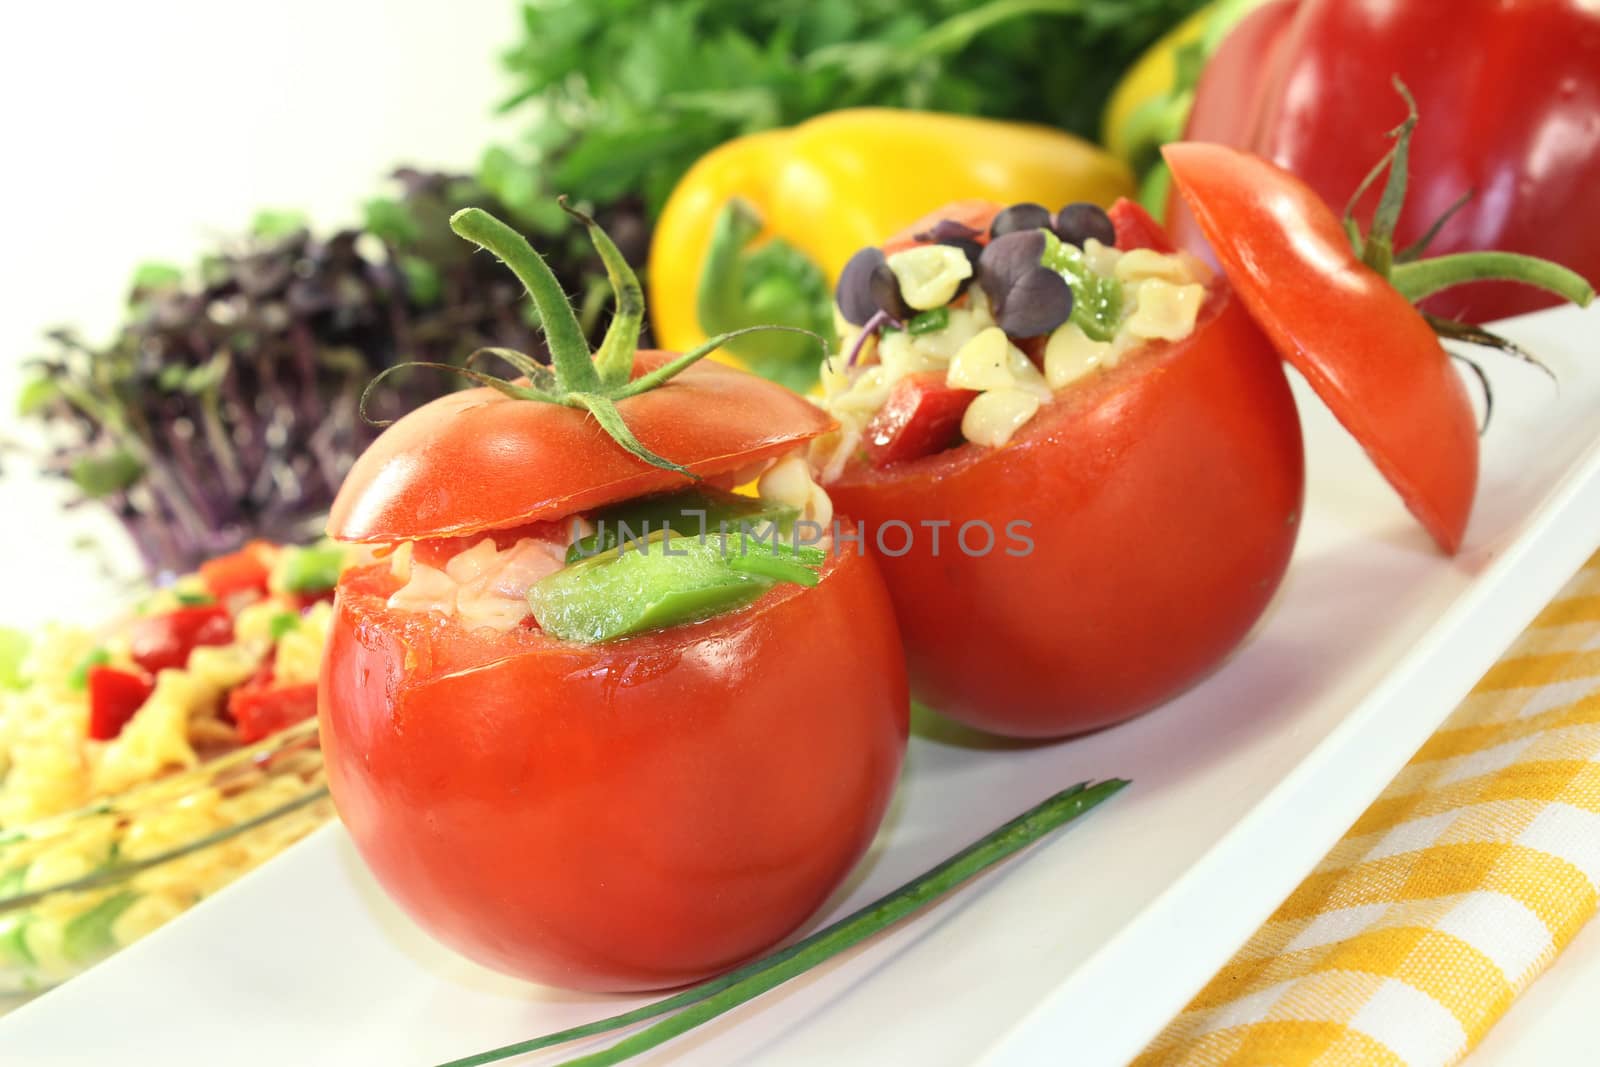 stuffed tomatoes by silencefoto